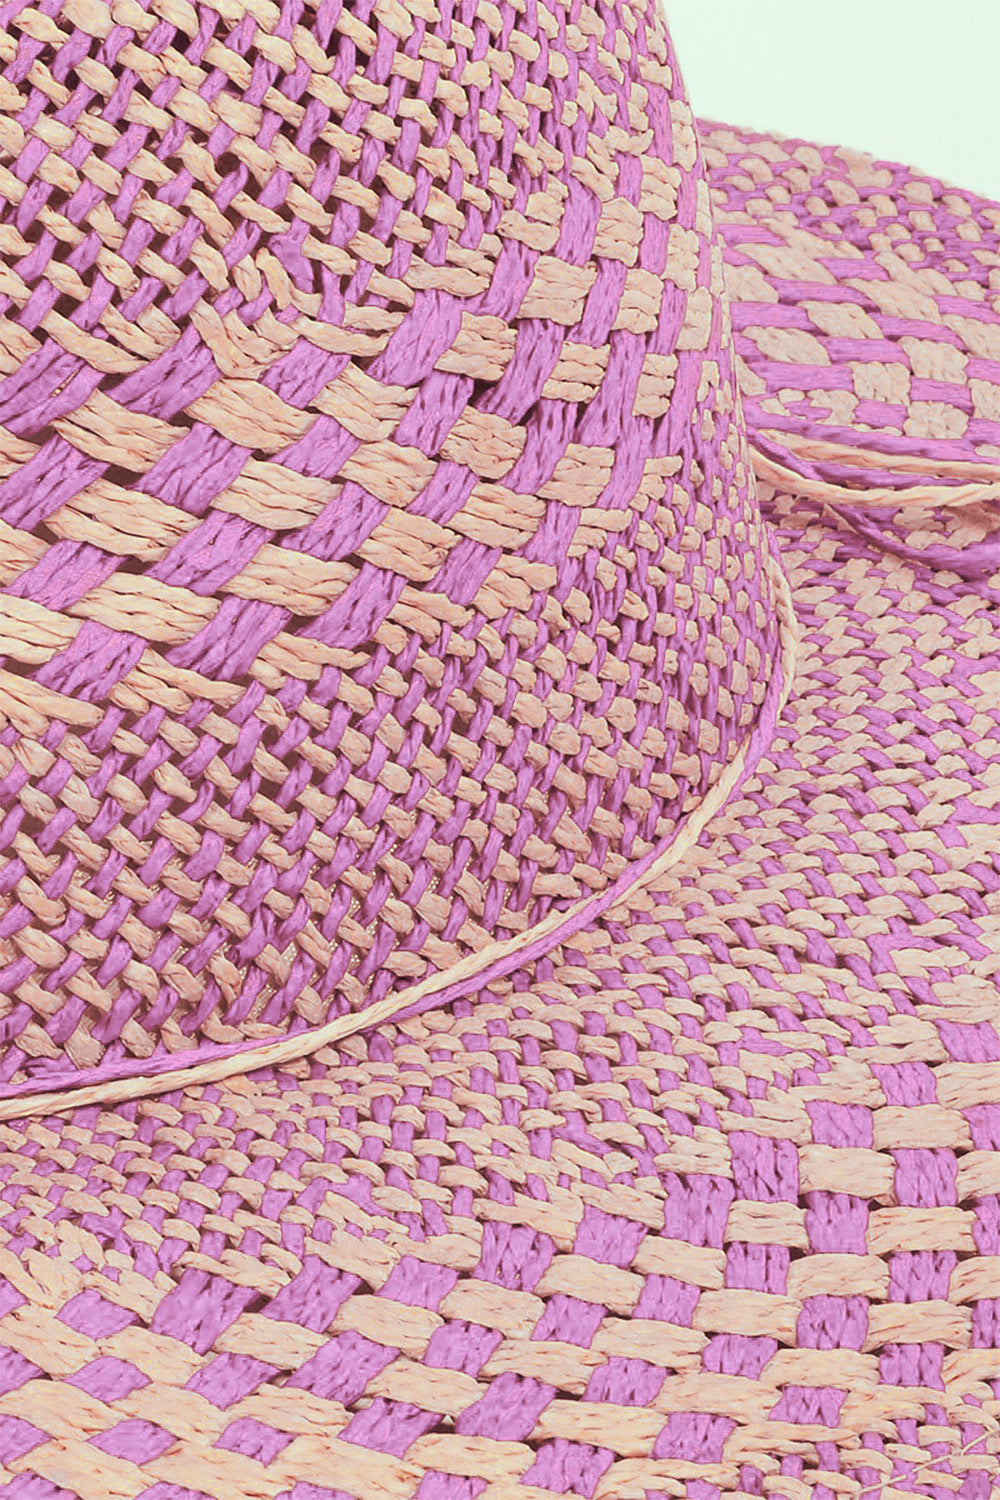 Fame Checkered Straw Weave Sun Hat  | KIKI COUTURE